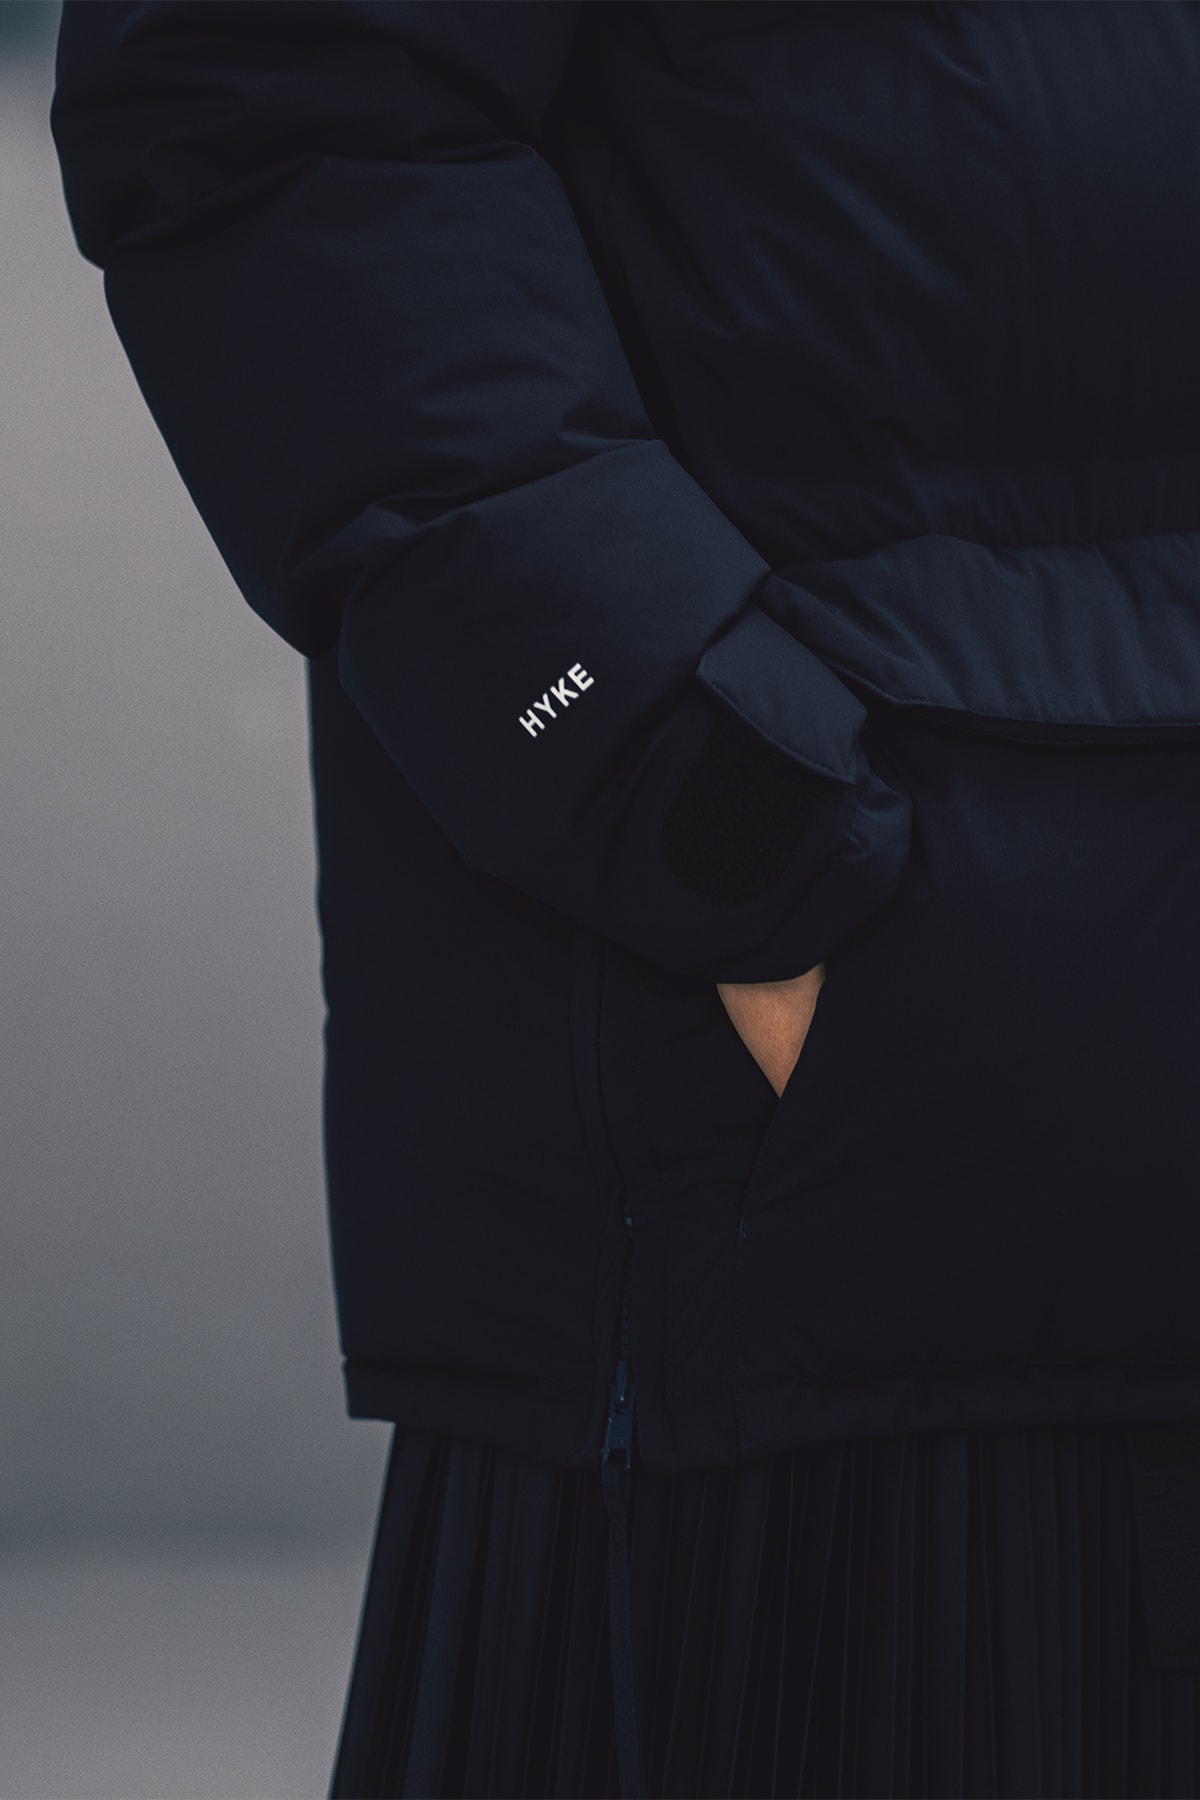 The North Face x HYKE Fall/Winter 2018 Lookbook Outerwear Jackets Puffers Silhouette Streetwear FW 18